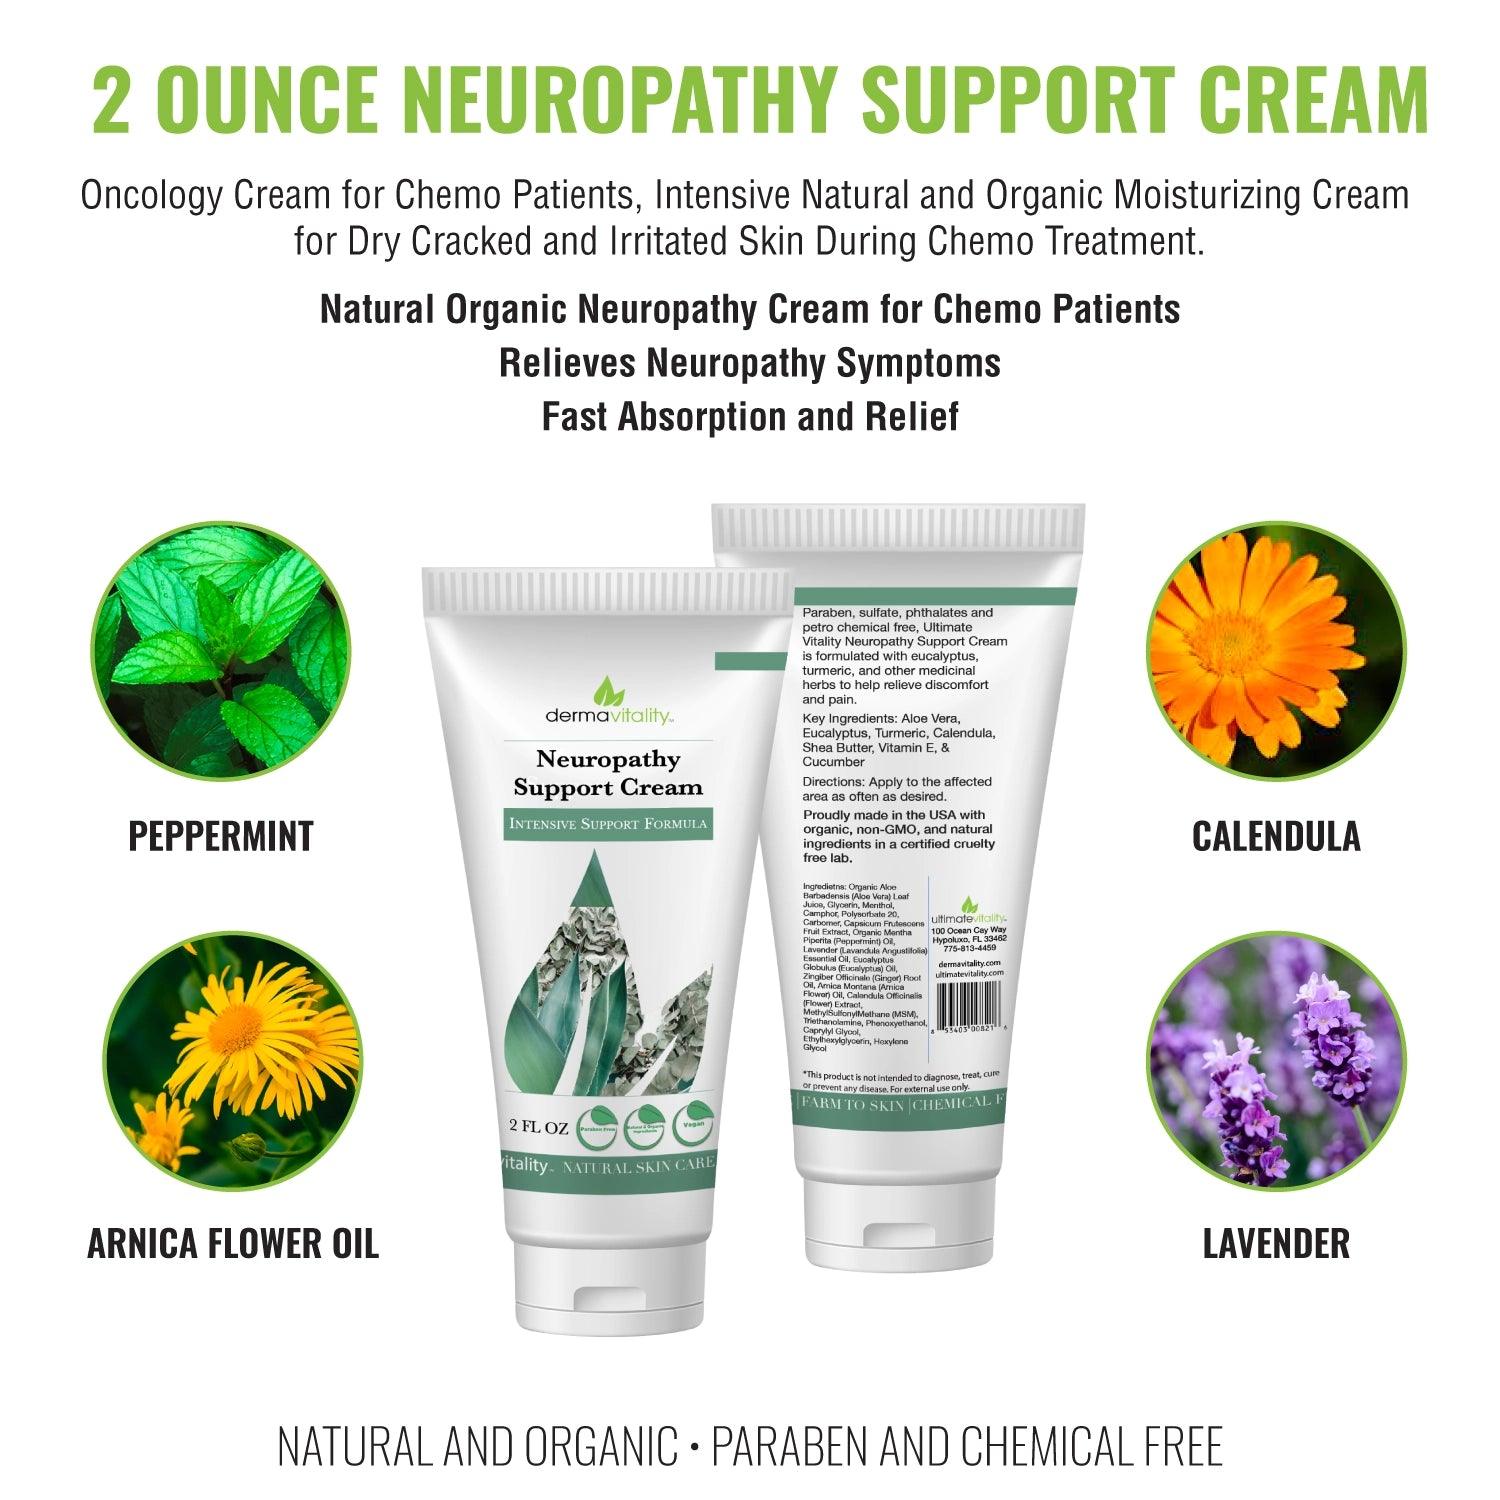 2 ounce neuropathy support cream